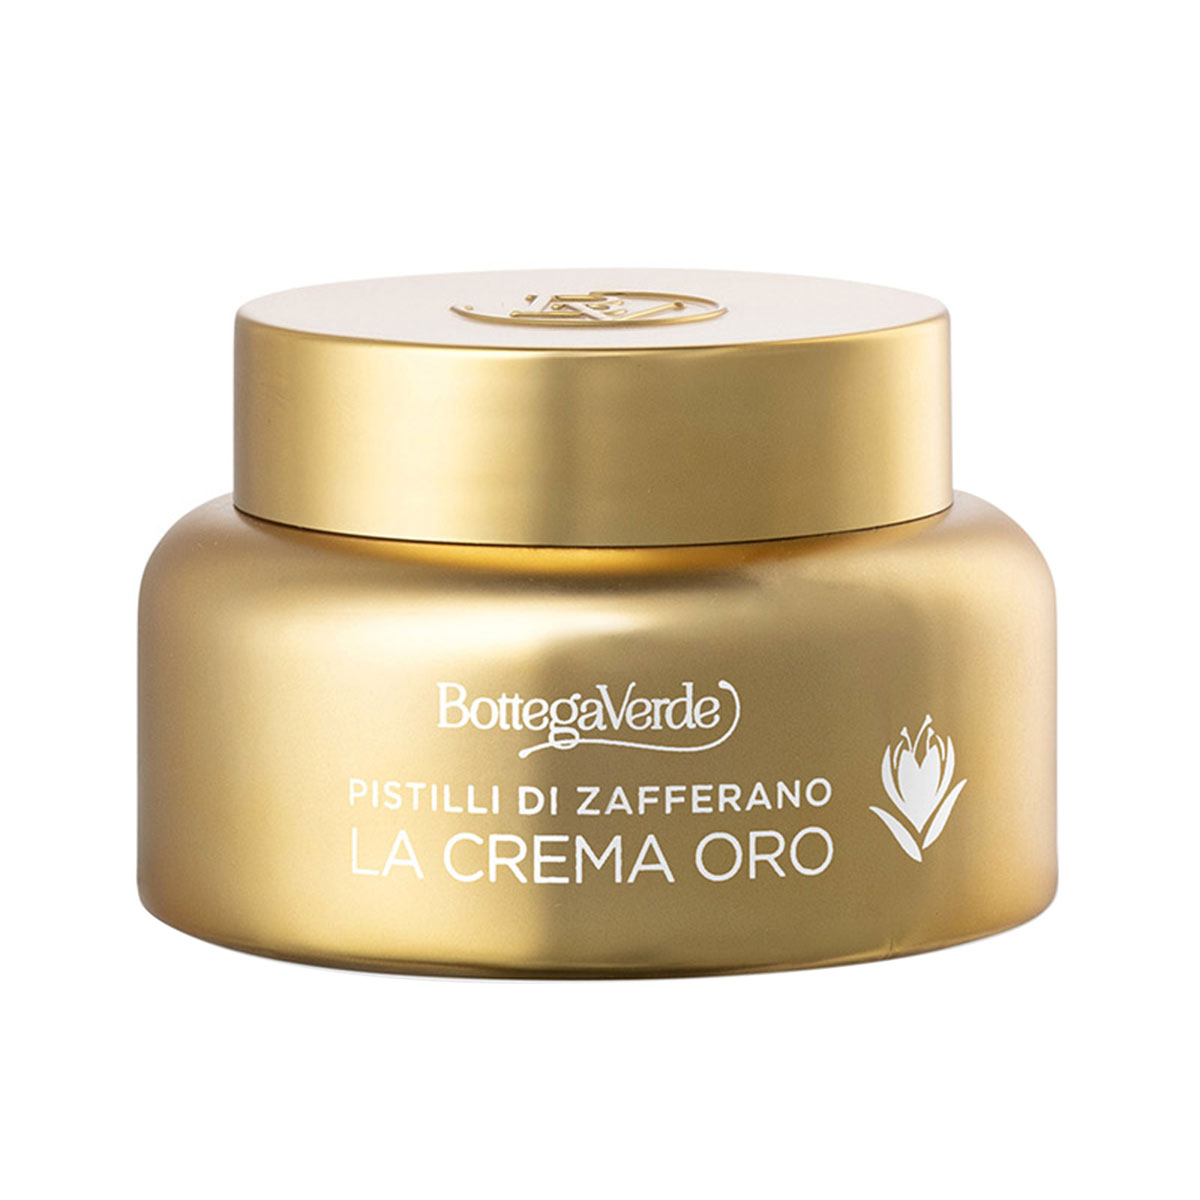 IX Herbal Facial Cream Firming Lifting Anti Aging/Wrinkles Facial Cream Face Care HPP